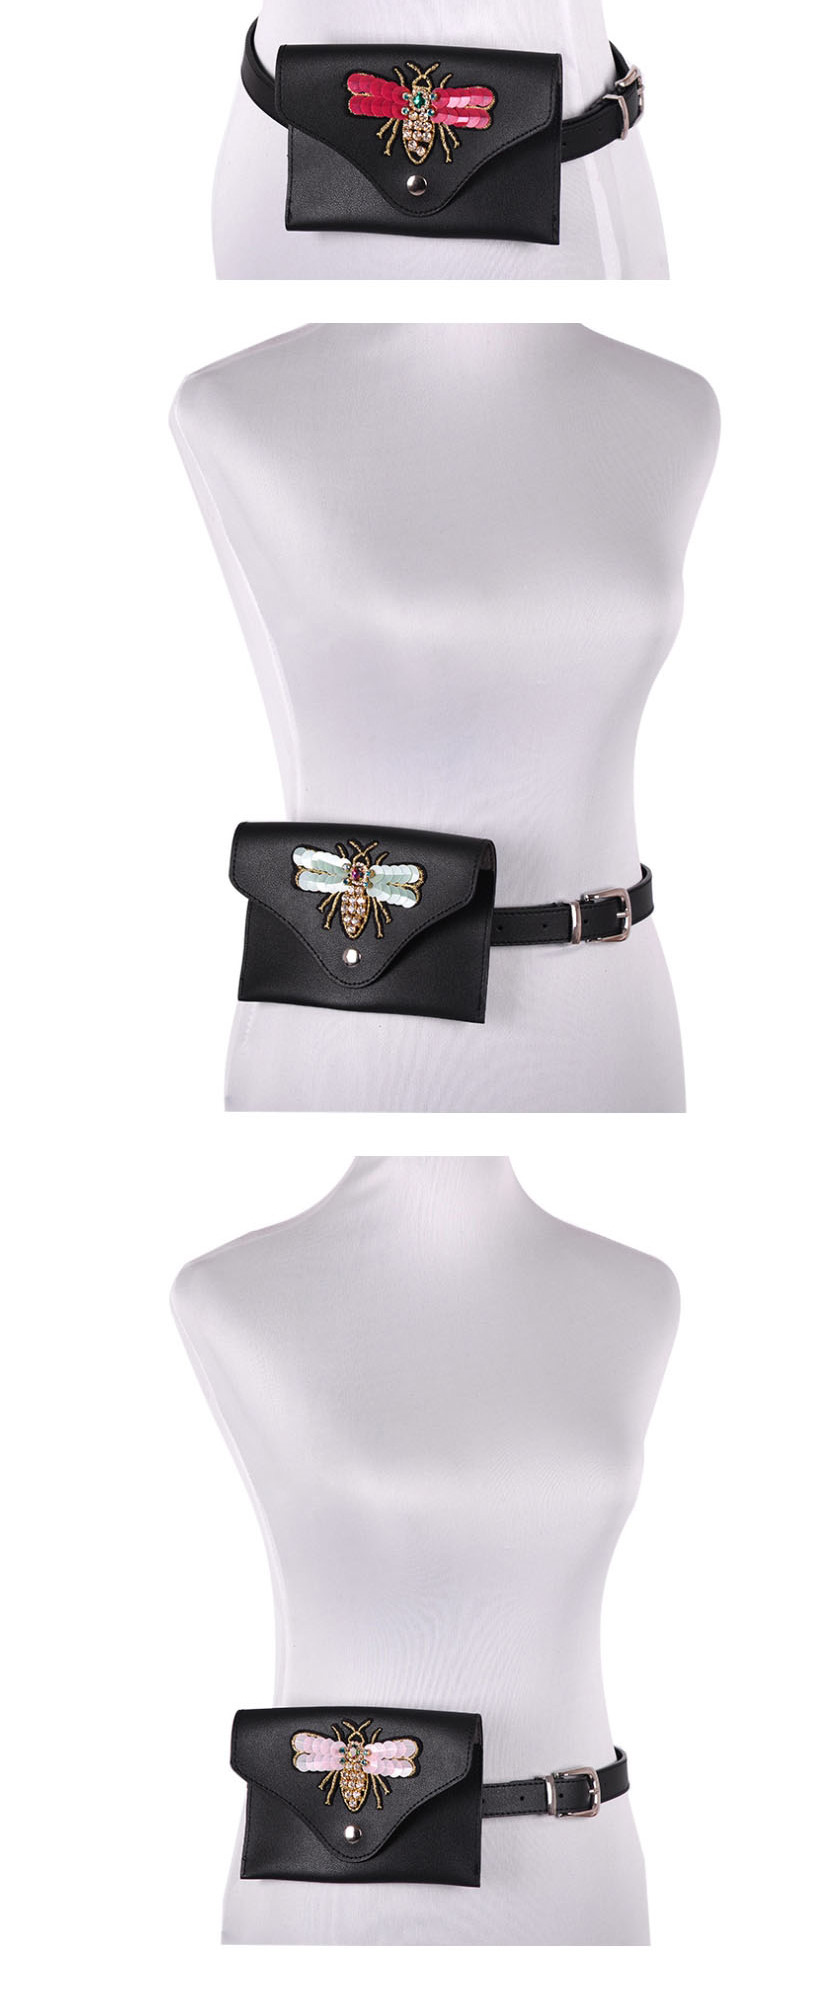 Fashion Pink Bevel Diagonal Belt Buckle Belt With Diamond Sequins,Thin belts